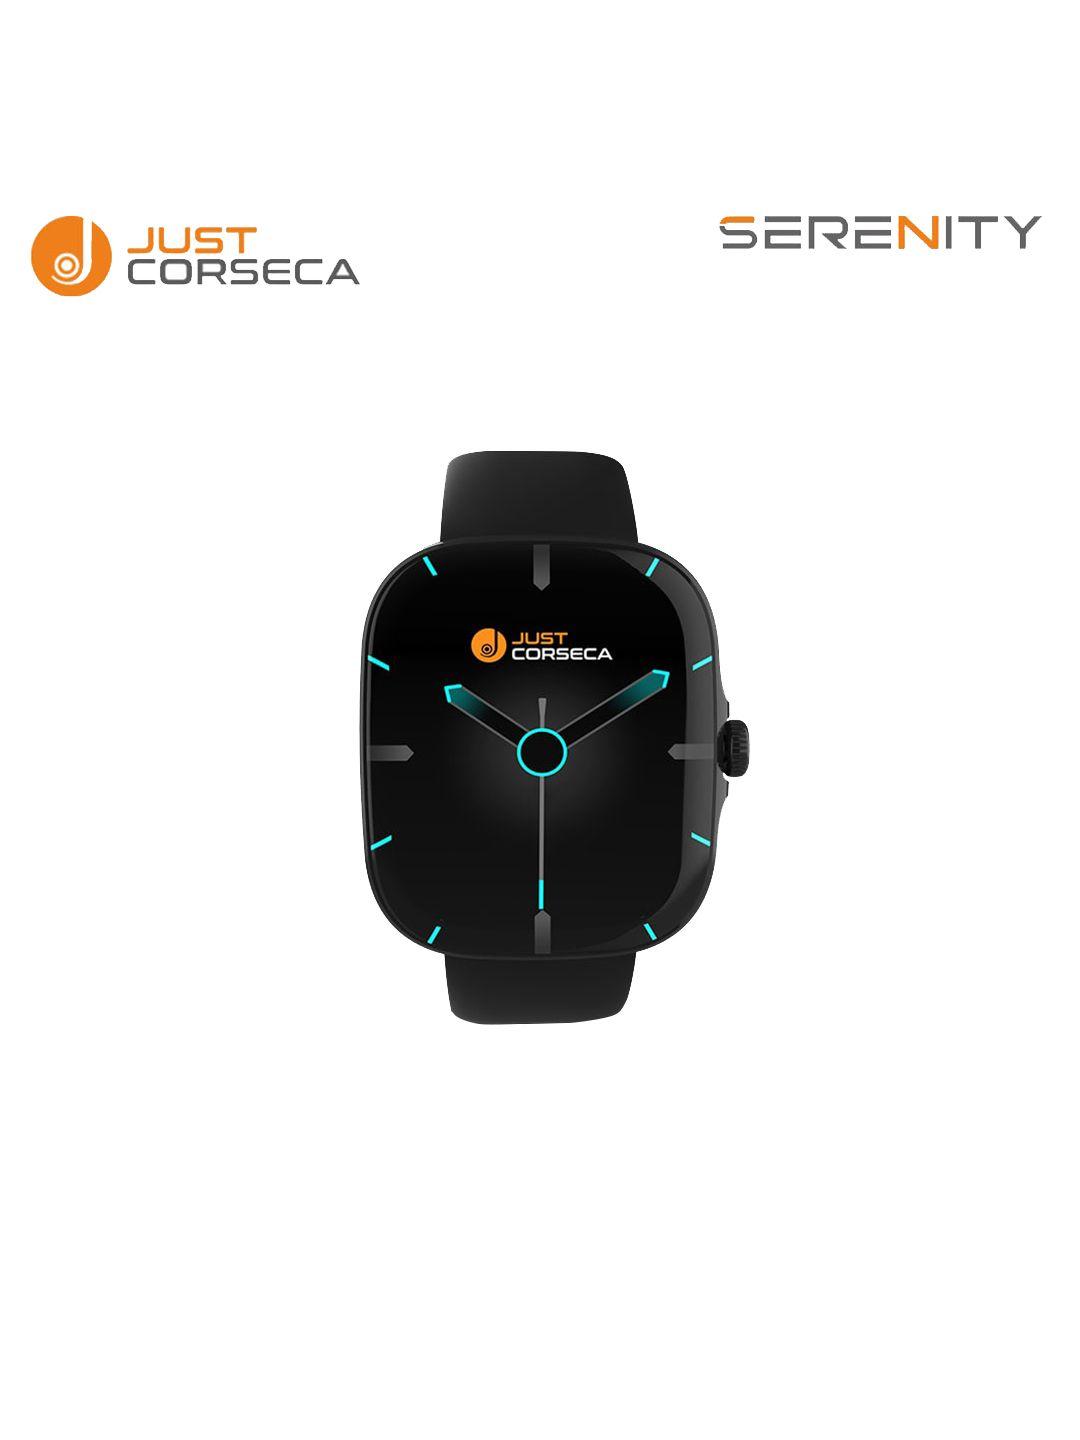 JUST CORSECA Serenity Smartwatch -